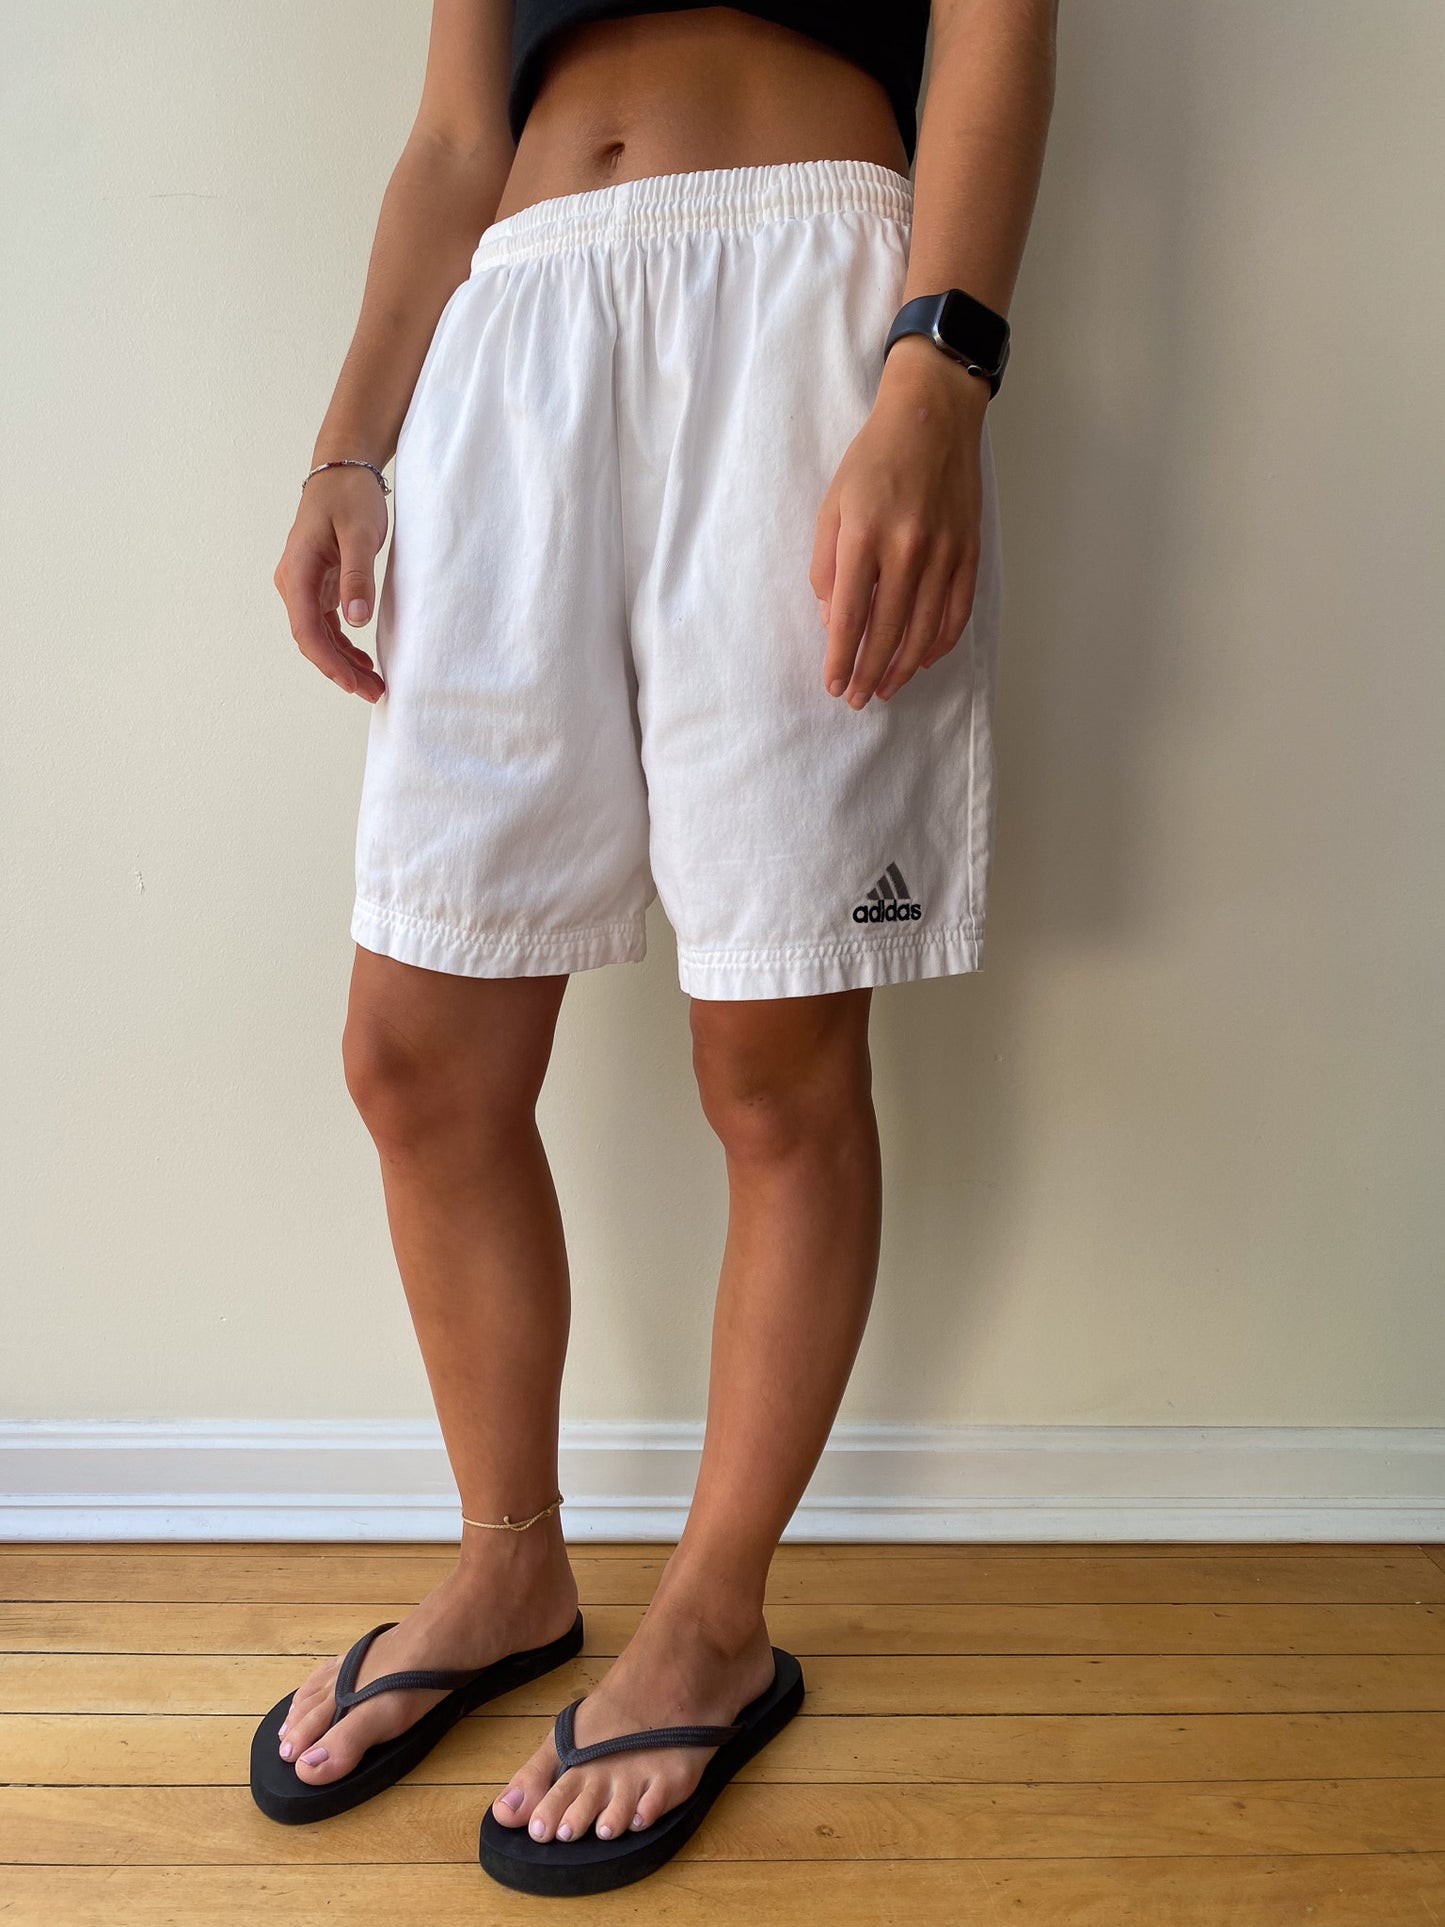 Adidas Cotton Track Shorts—[S]